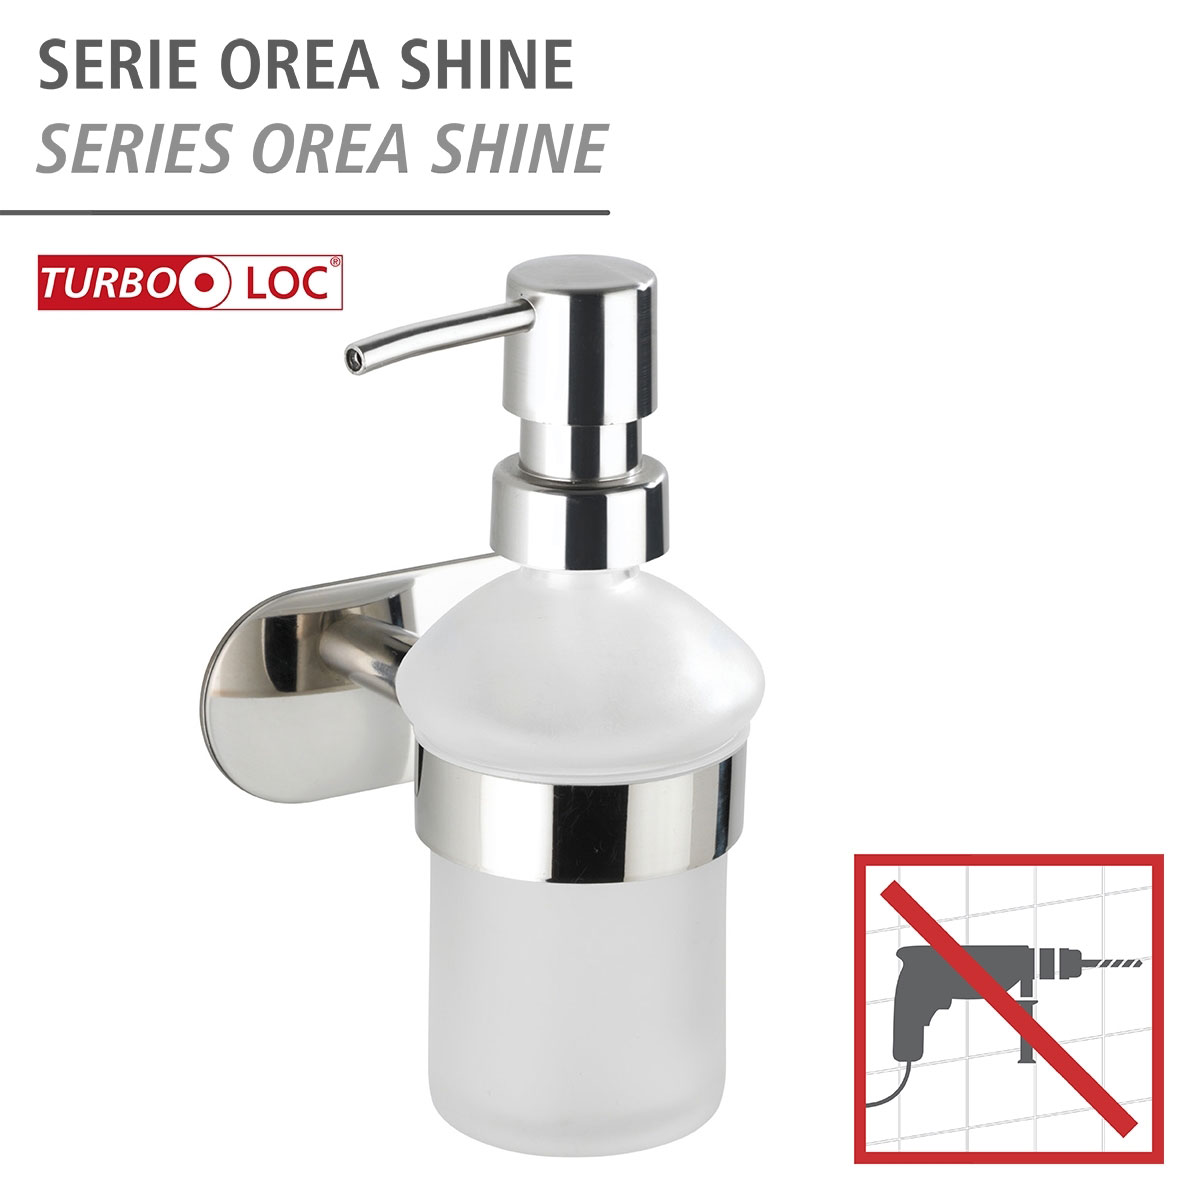 Wenko Turbo-Loc Seifenspender Orea Shine ca 200 ml | 503696 | Spülmittelspender